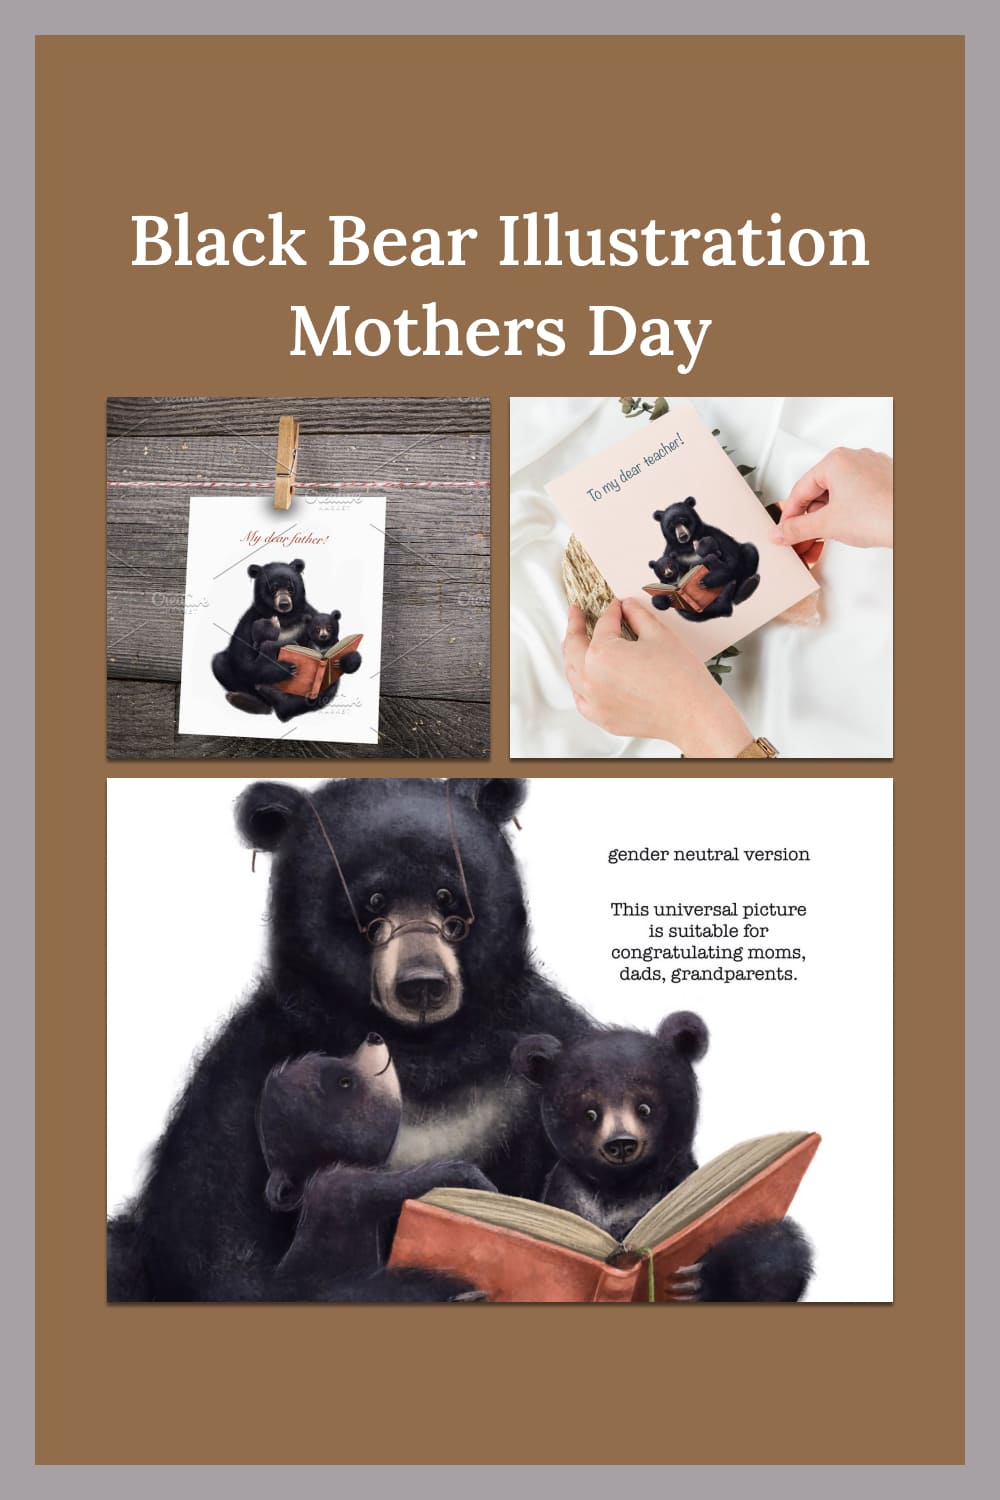 Black bear illustration. mothers day - pinterest image preview.